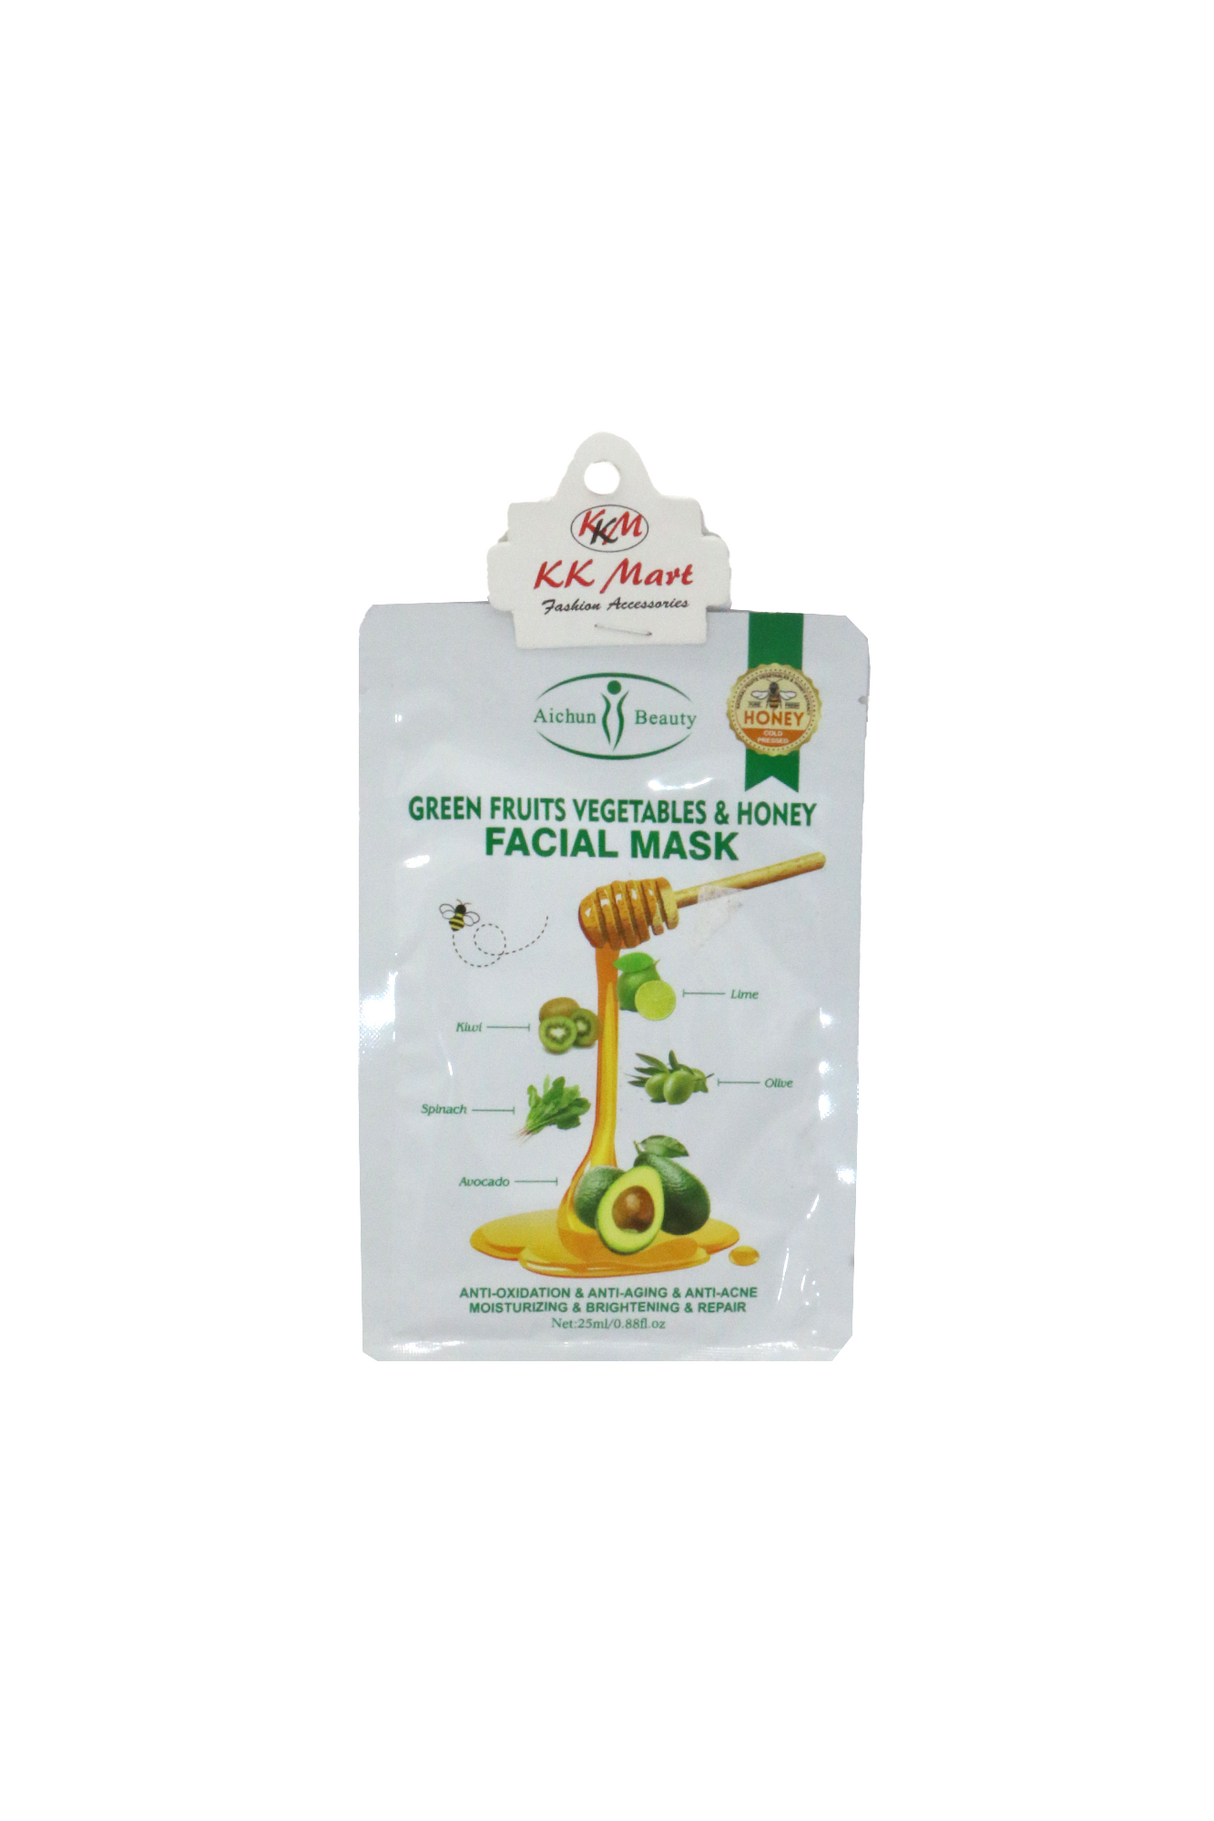 aichun beauty sheet mask green fruits vegetable & honey 25ml